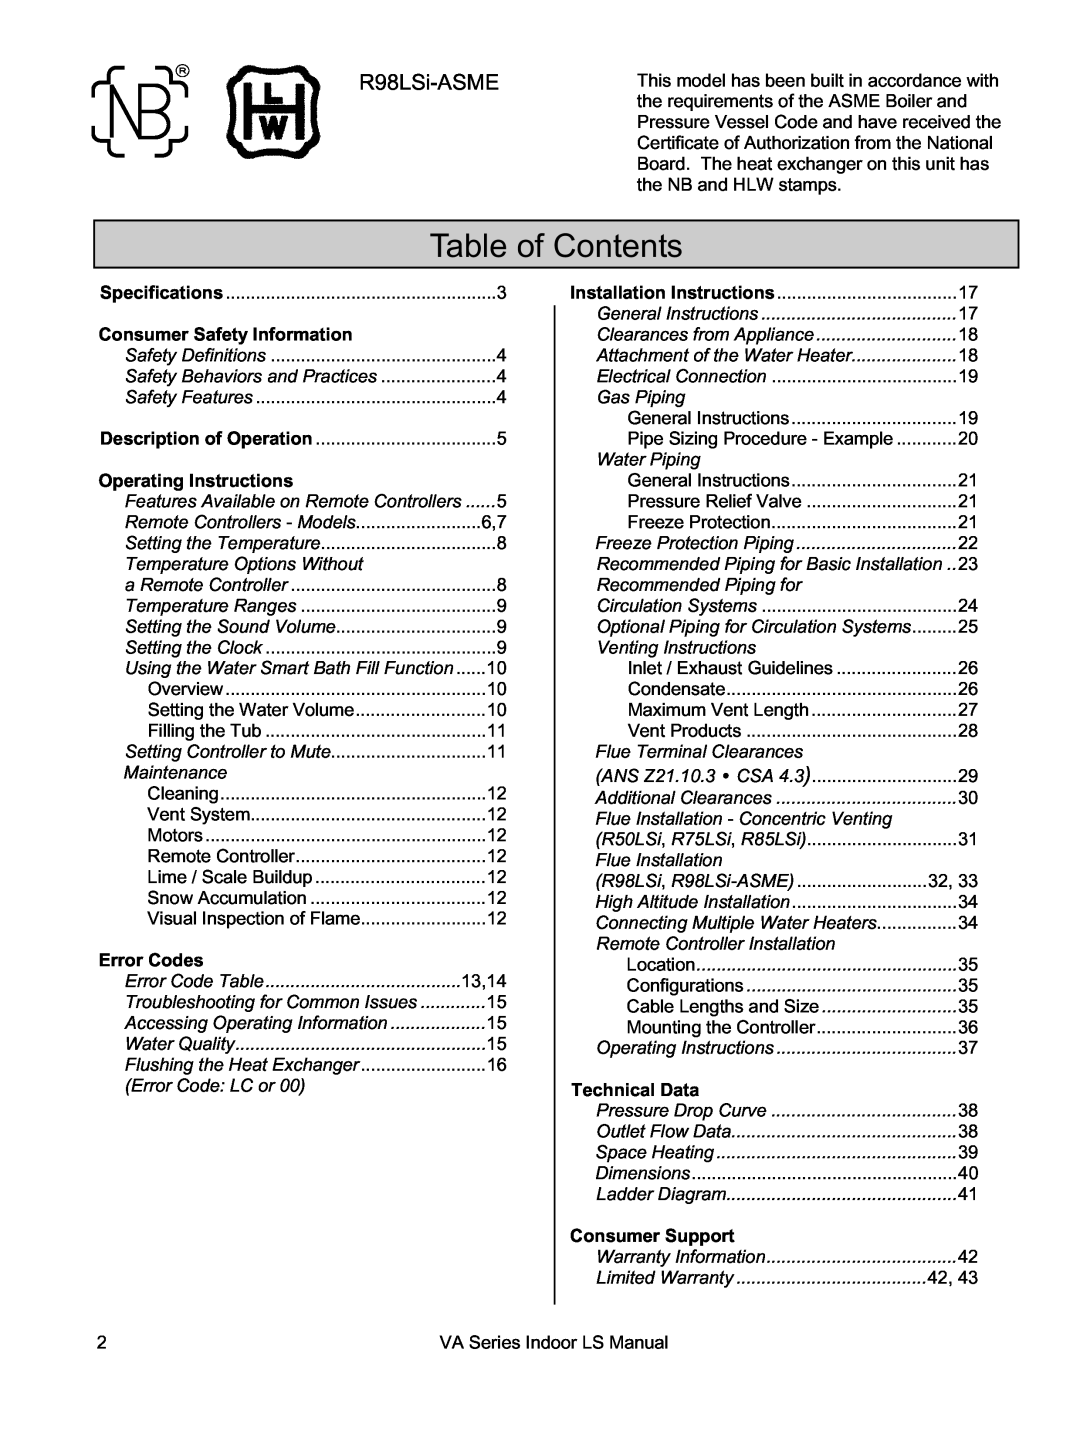 Rinnai REU-VA3237FFU installation manual Table of Contents, R98LSi-ASME 